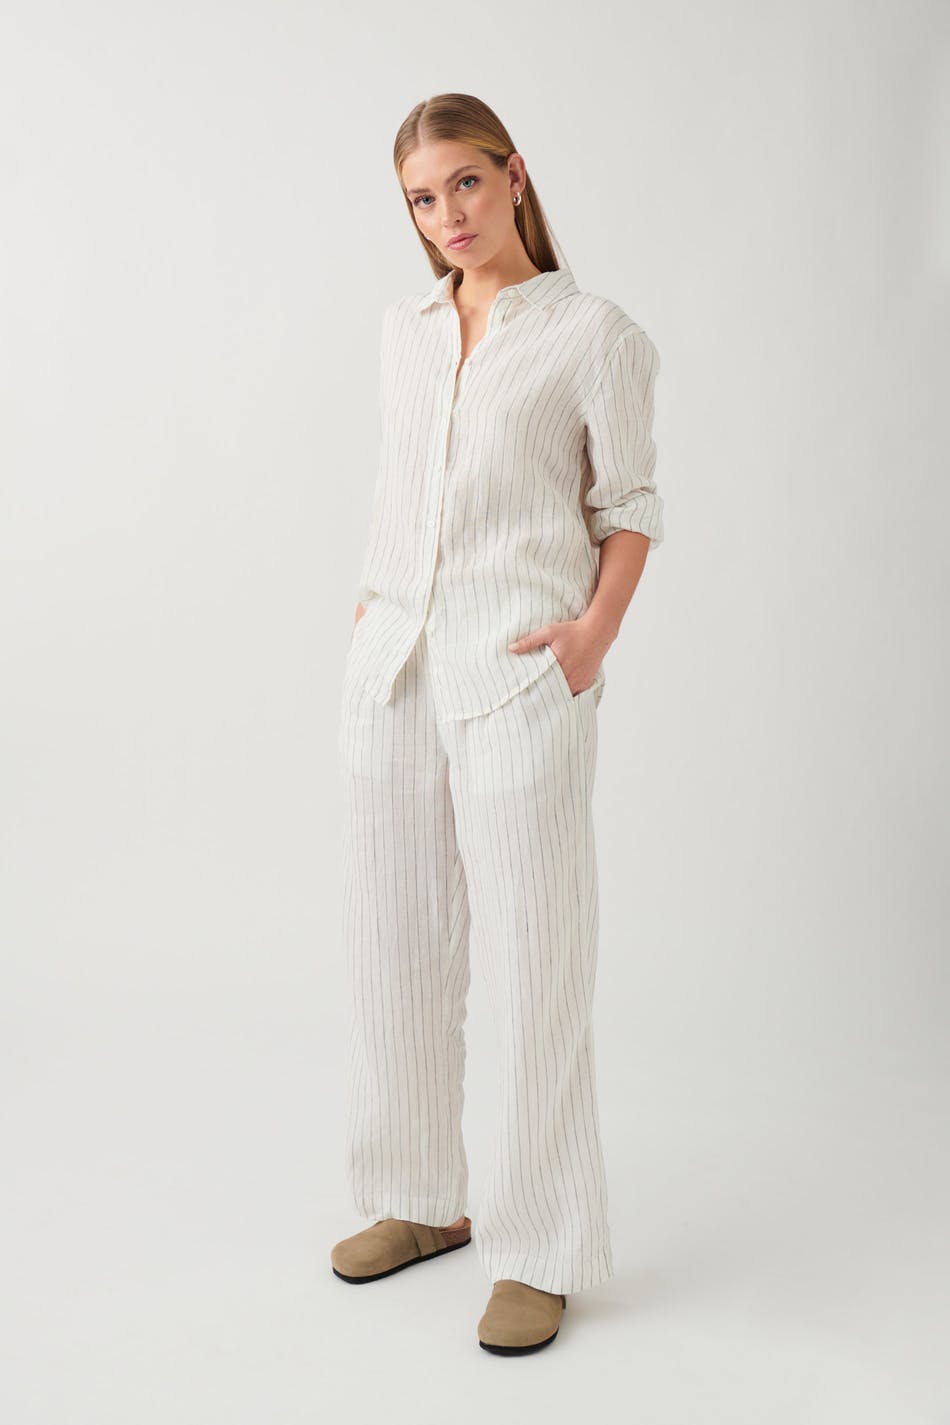 Gina Tricot - Linen trousers - linnebyxor - White - L - Female